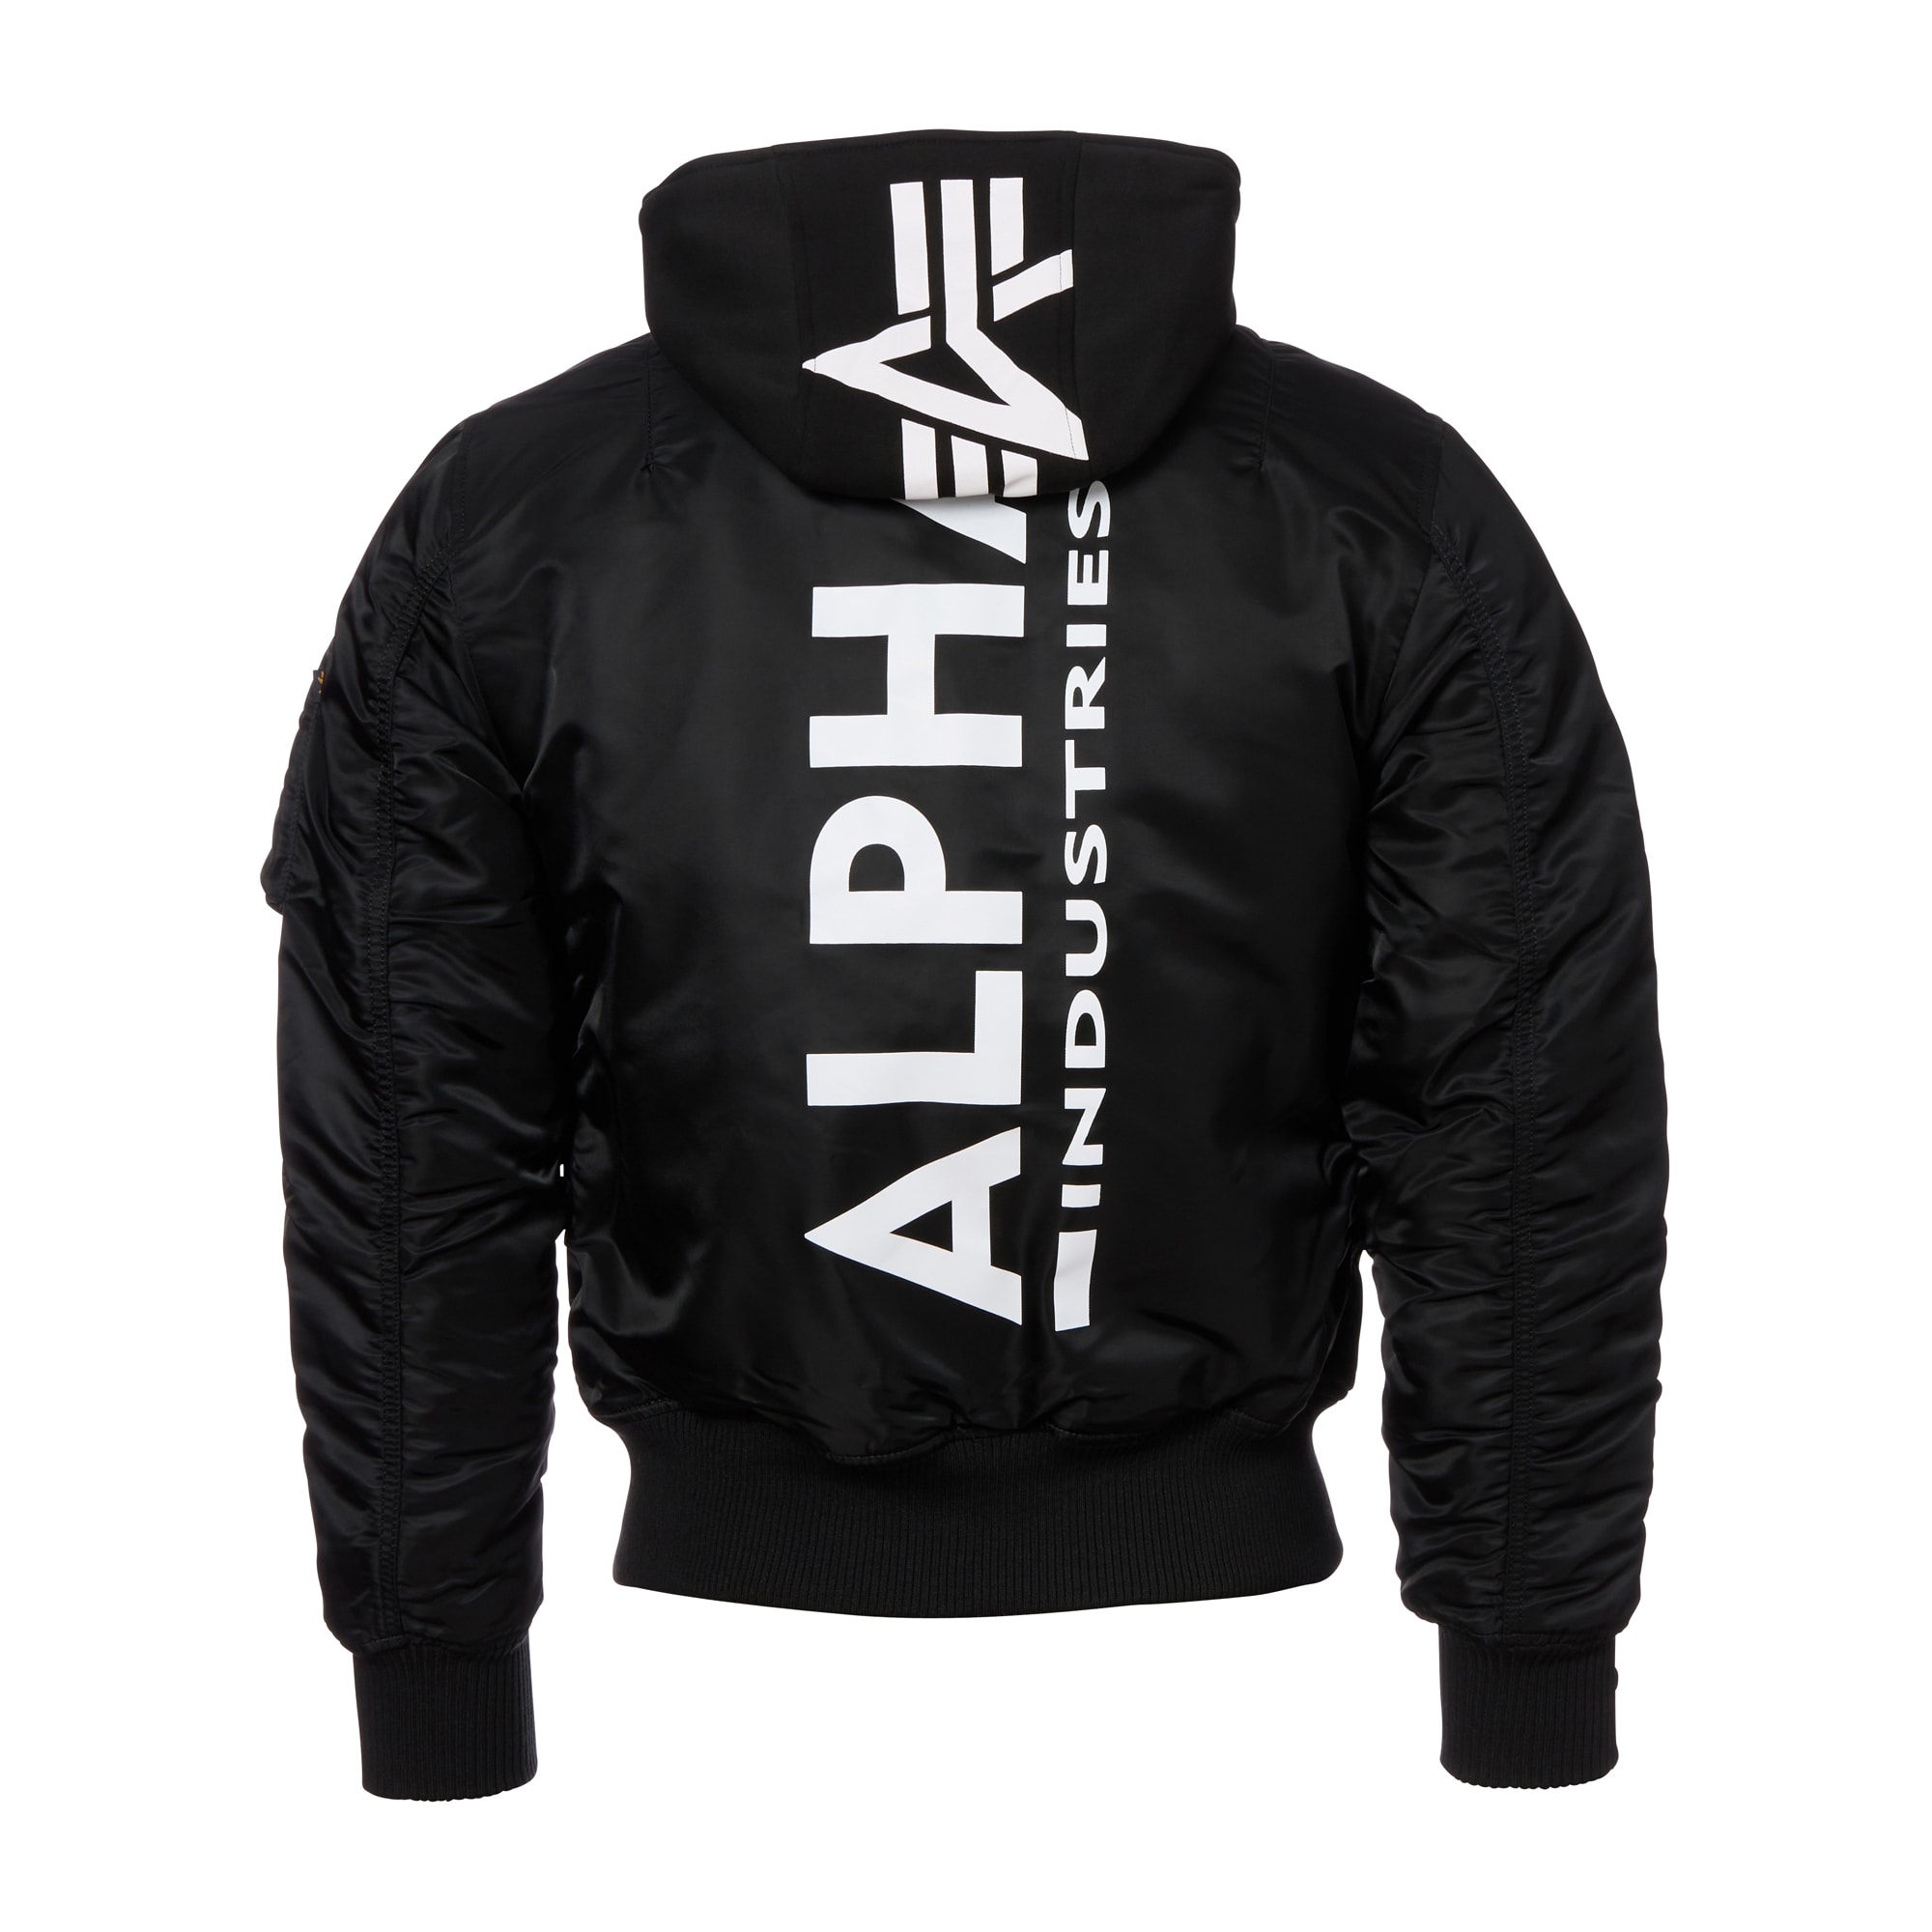 Alpha MA-1 | Jacket Jacket | black/white Back Industries Print MA-1 Back Jackets ZH | | | Men Industries ZH Alpha black/white Jackets Clothing Print